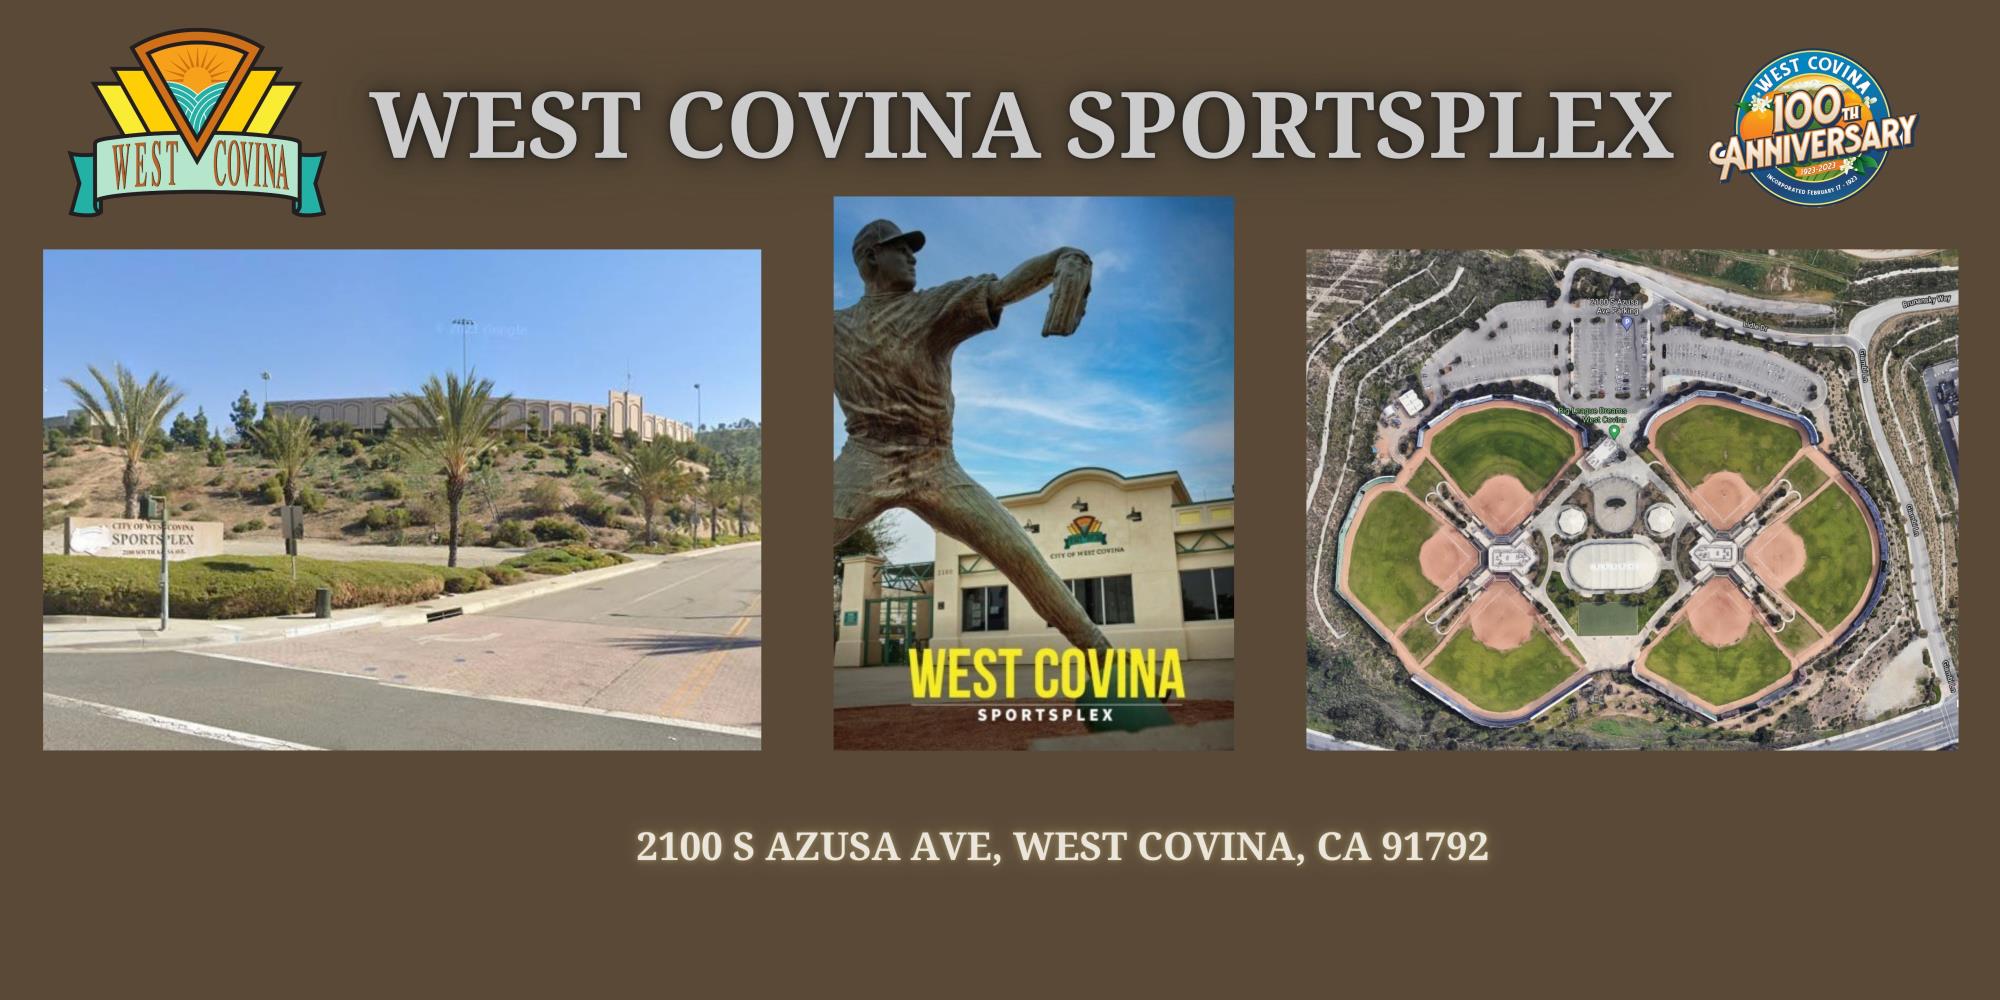 West Covina Sportsplex